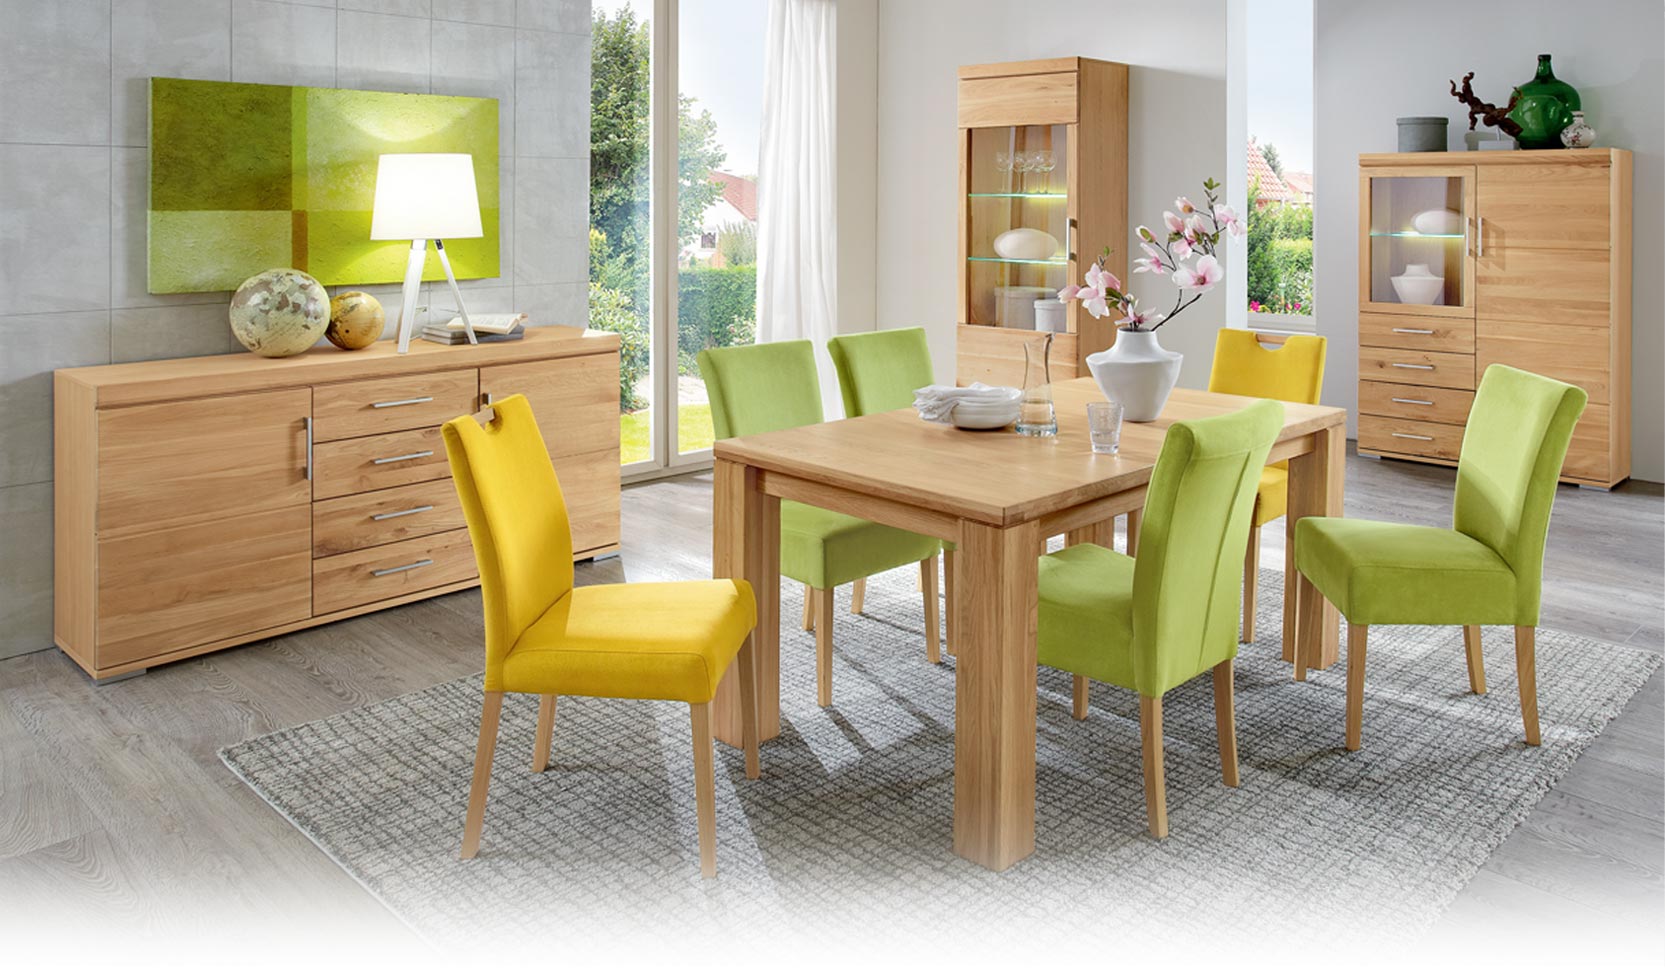 Niehoff nábytek k.s. - We are a direct manufacturer of dining furniture